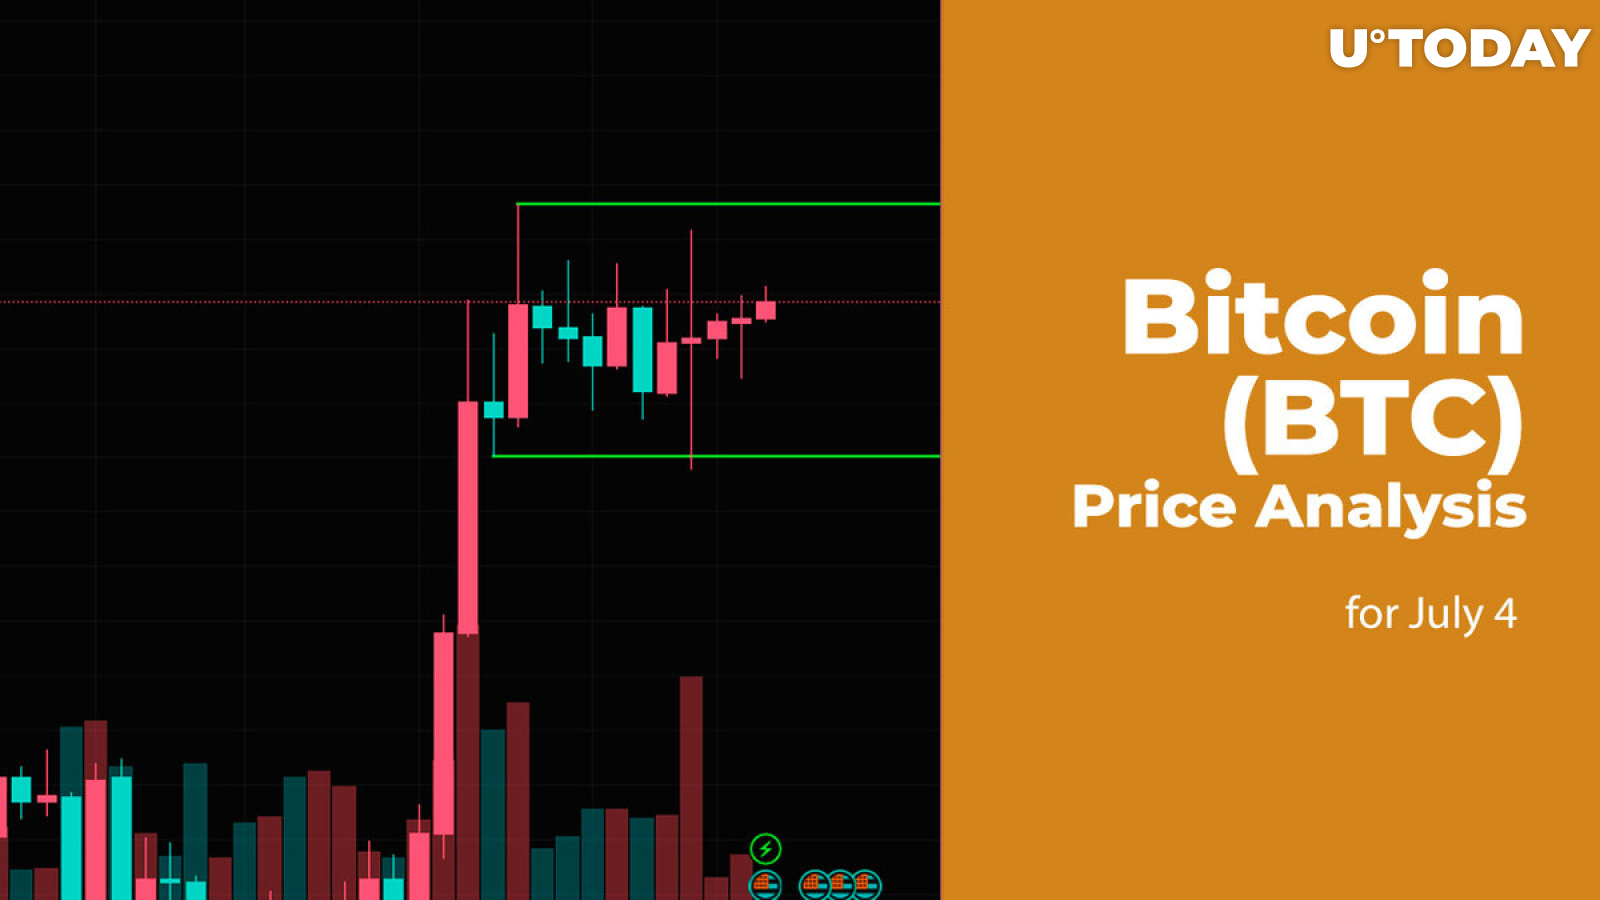 Bitcoin (BTC) Price Analysis for July 4